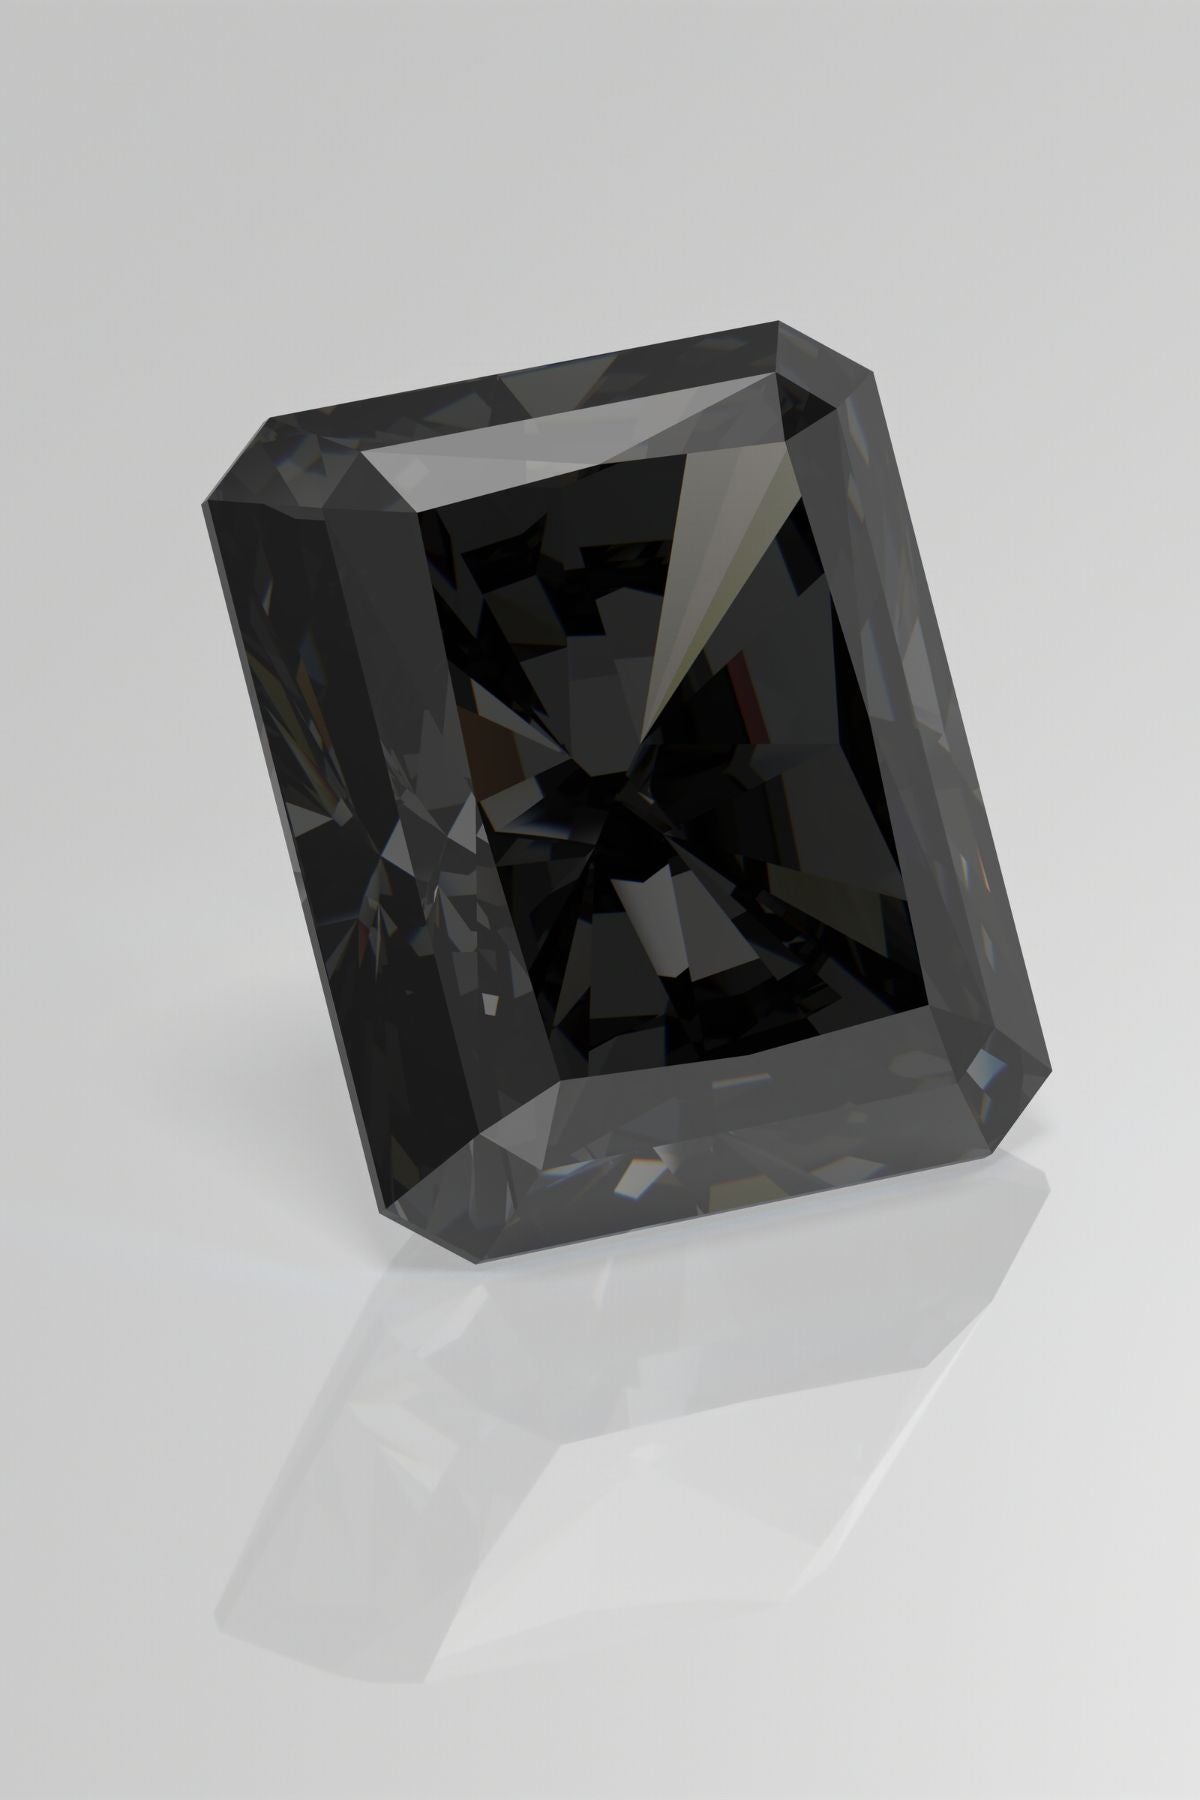 What Are Black Diamonds? – Paul Bram